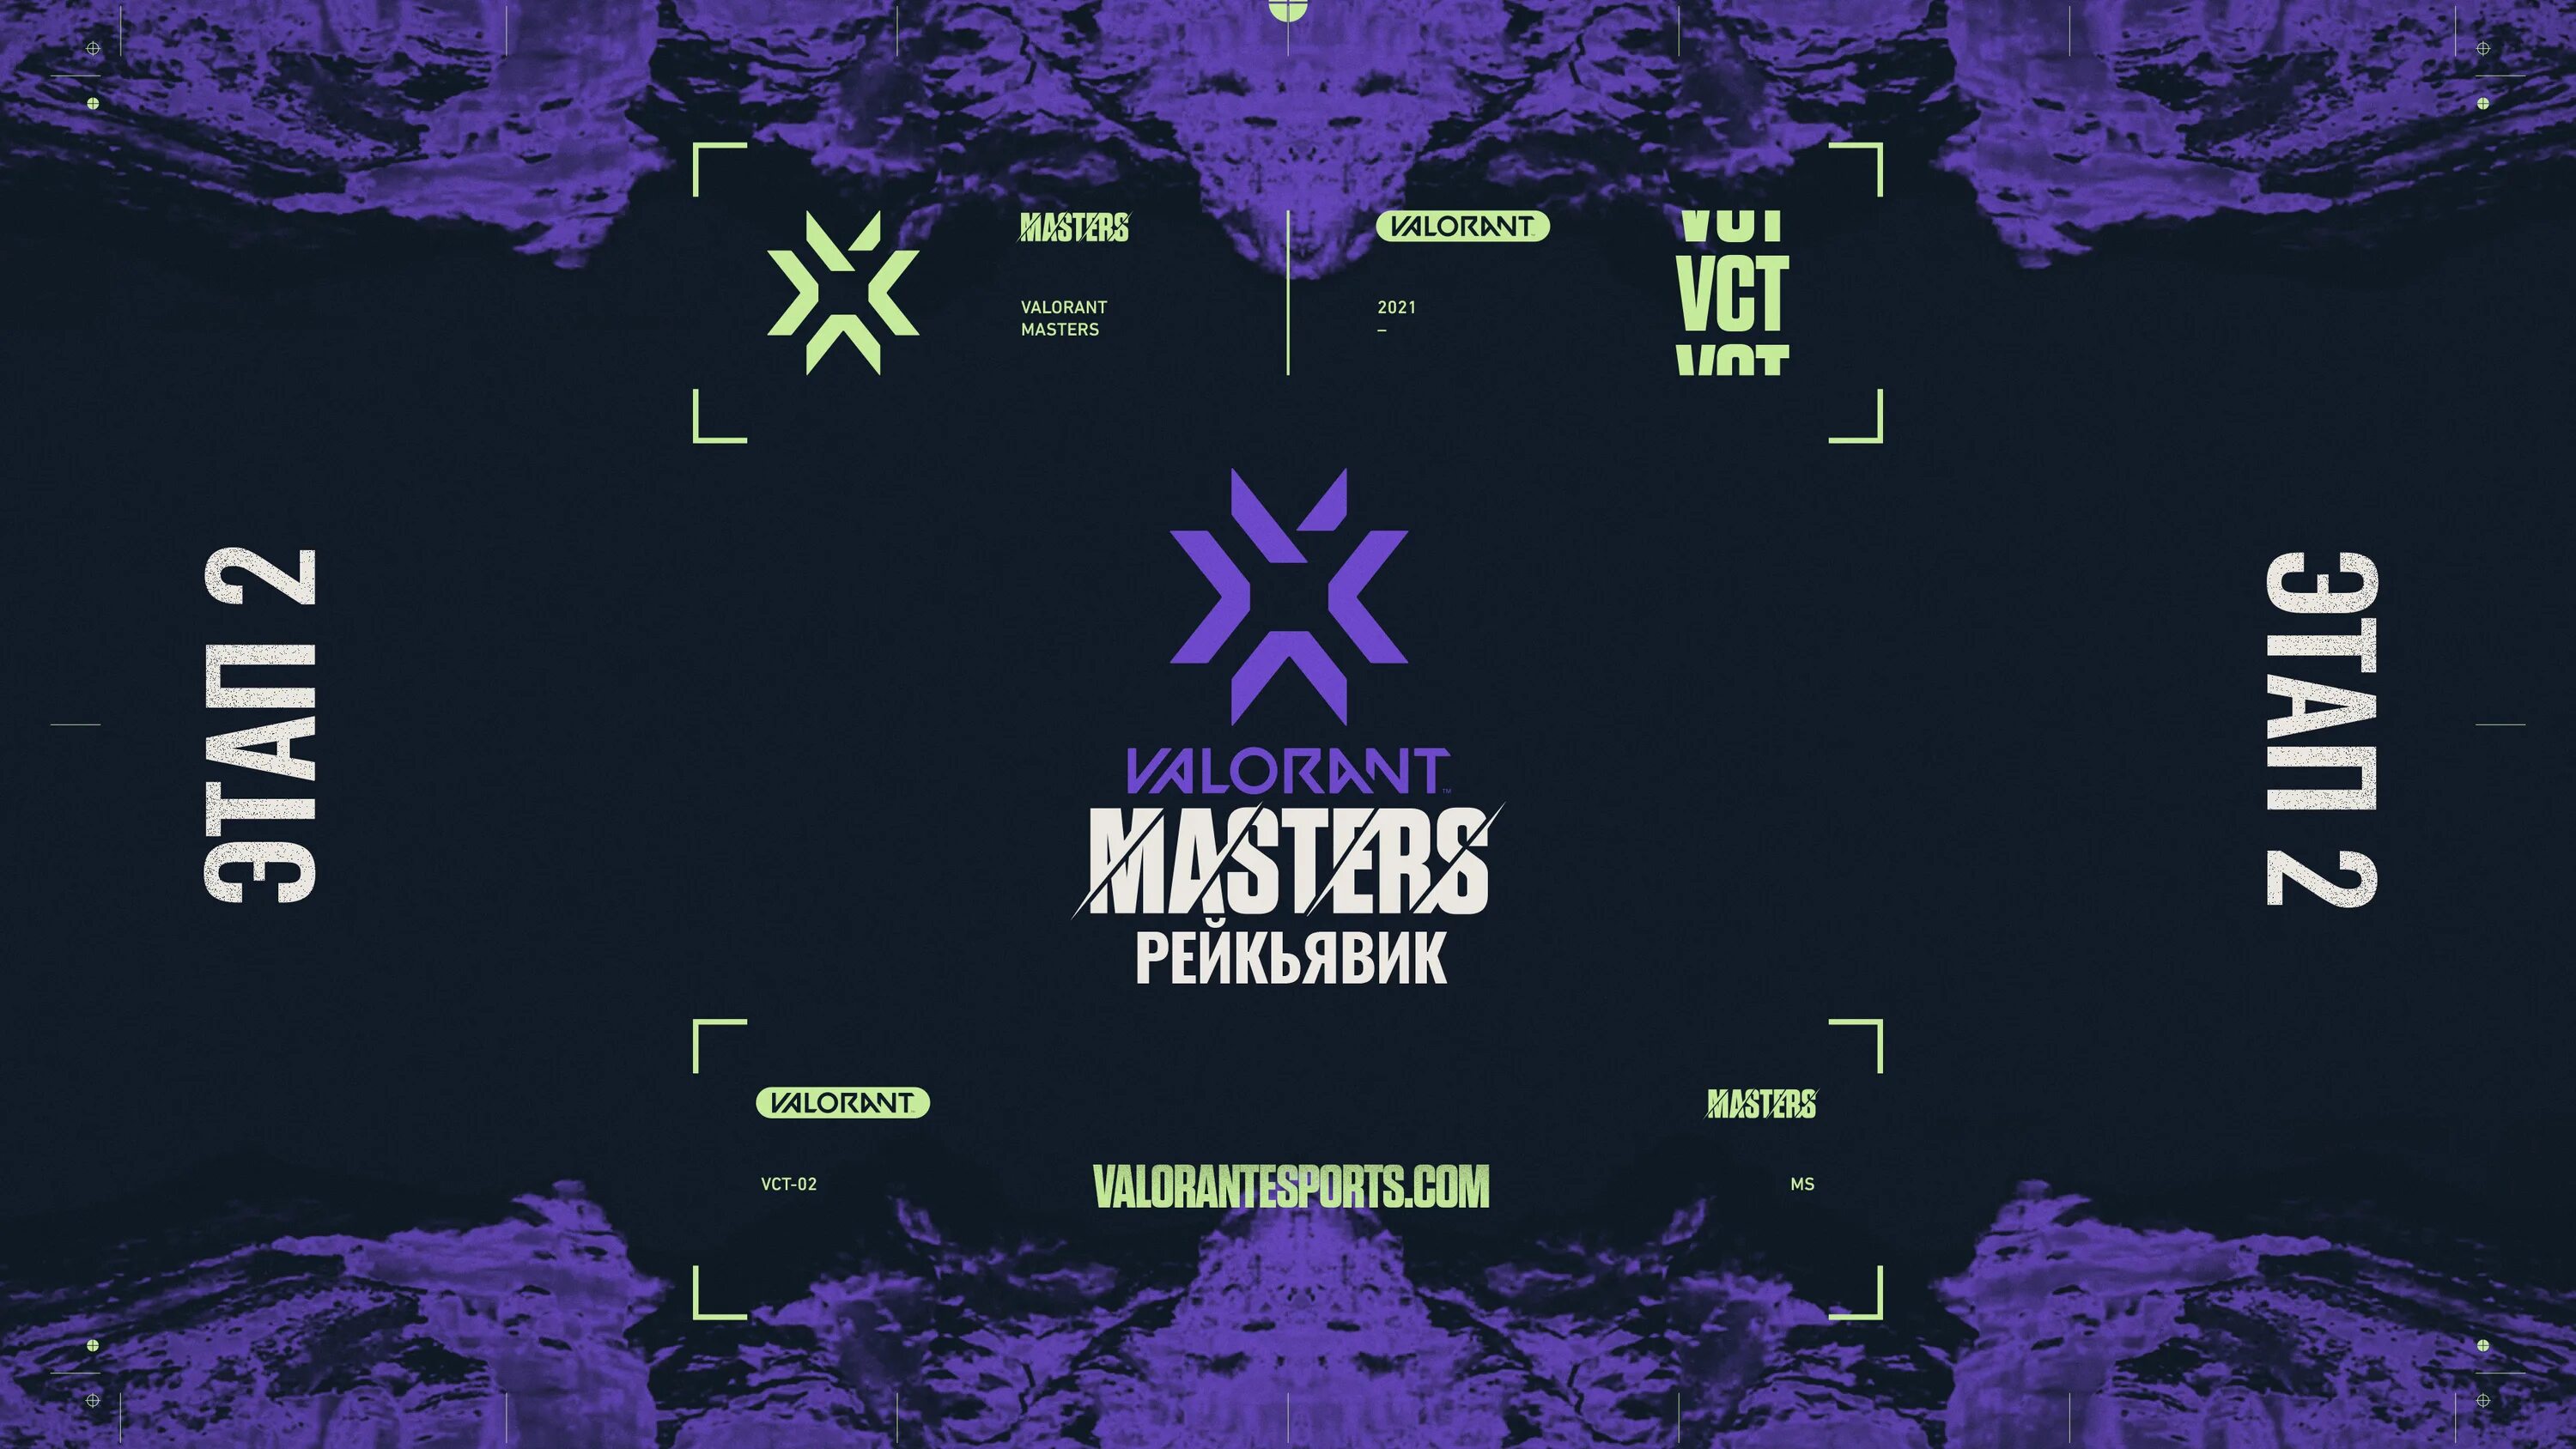 22 masters. Valorant Masters Reykjavik. VCT Masters Reykjavík. VCT Masters Reykjavík 2021. Valorant Masters Reykjavik 2022.